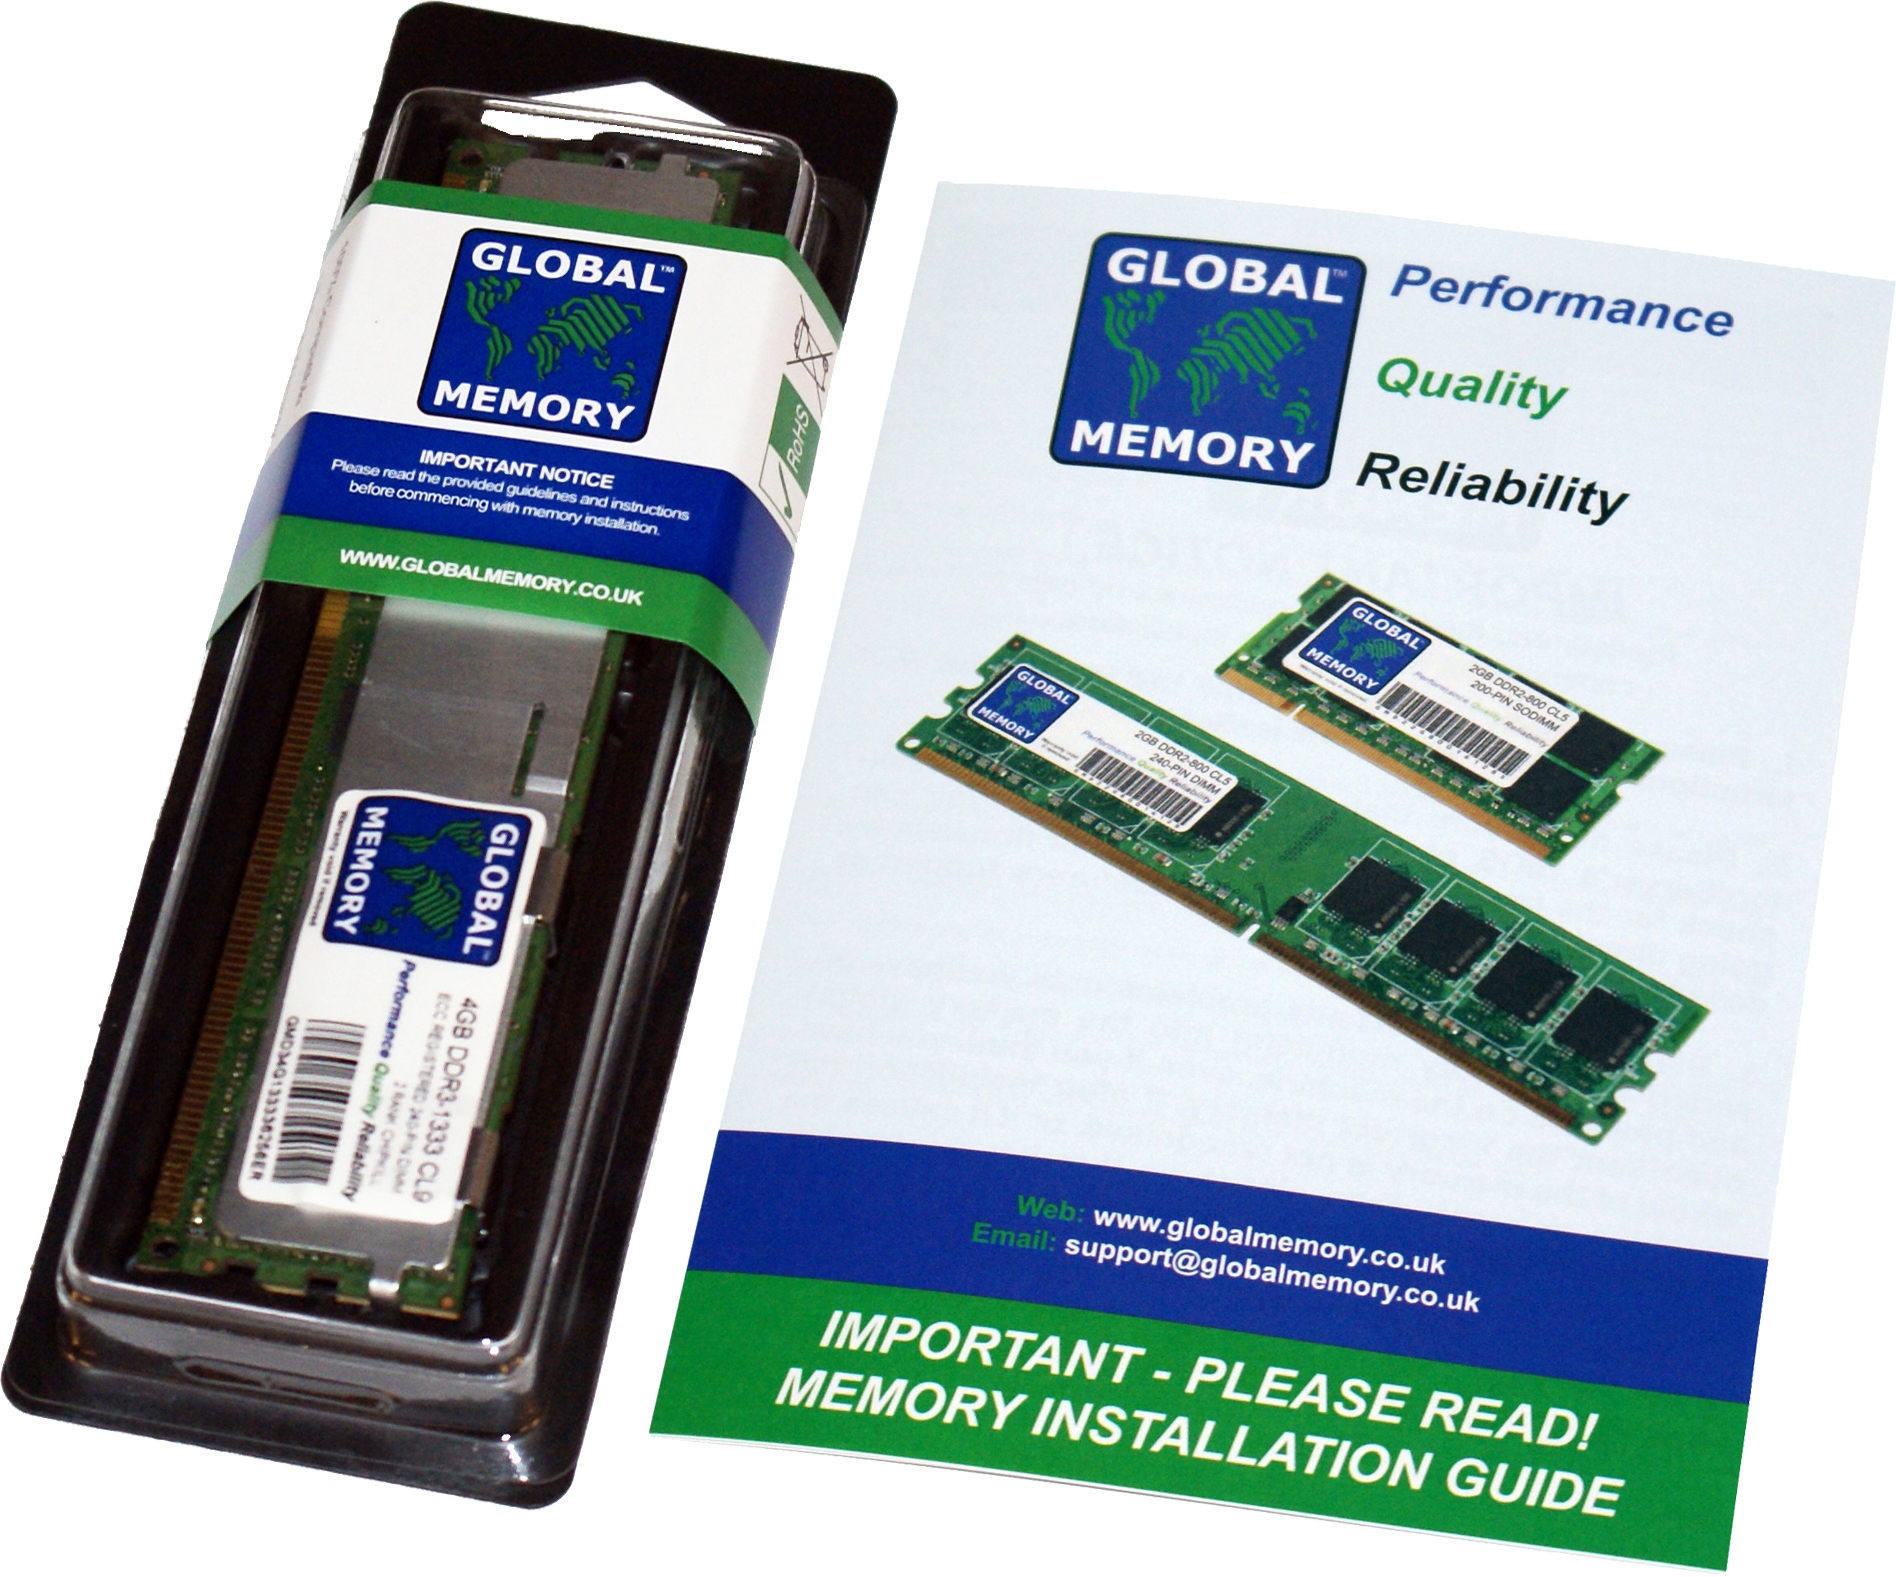 16GB DDR3 1066/1333MHz 240-PIN ECC REGISTERED DIMM (RDIMM) MEMORY RAM FOR HEWLETT-PACKARD SERVERS/WORKSTATIONS (4 RANK NON-CHIPKILL)